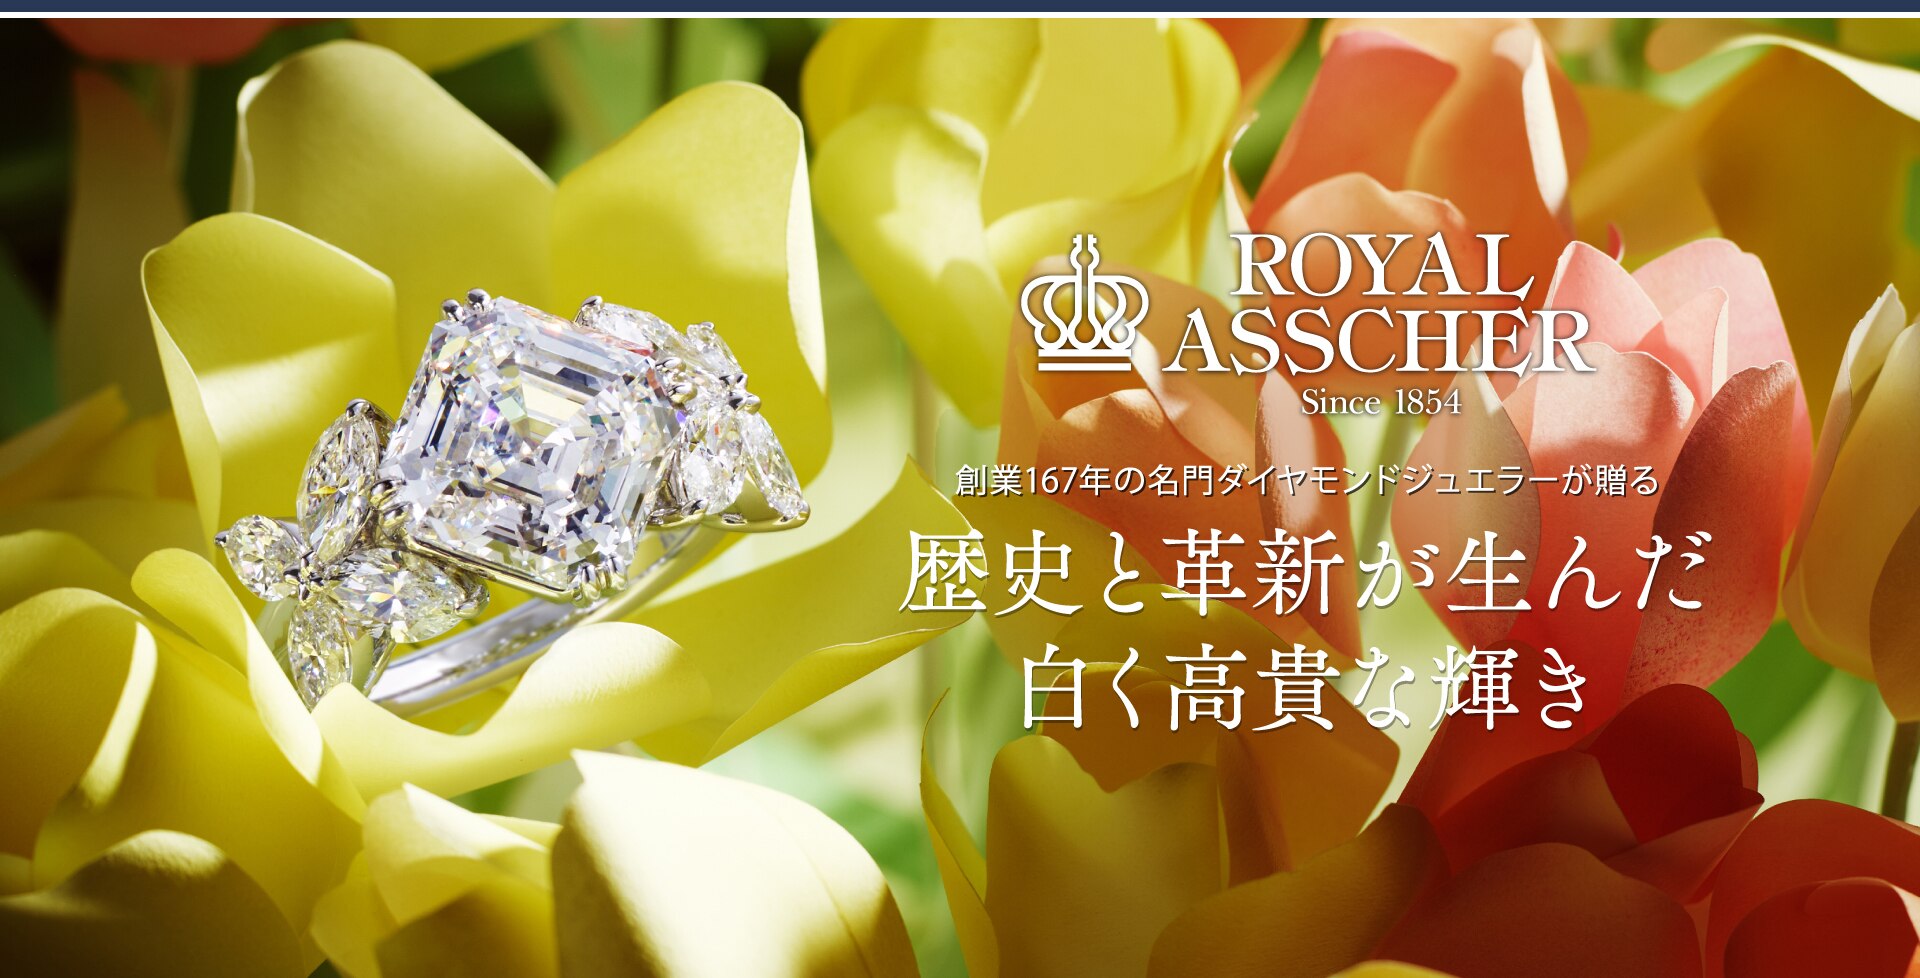 ROYAL ASSCHER Since1854 創業167年の名門ダイヤモンドジュエラーが贈る 歴史と革新が生んだ白く高貴な輝き